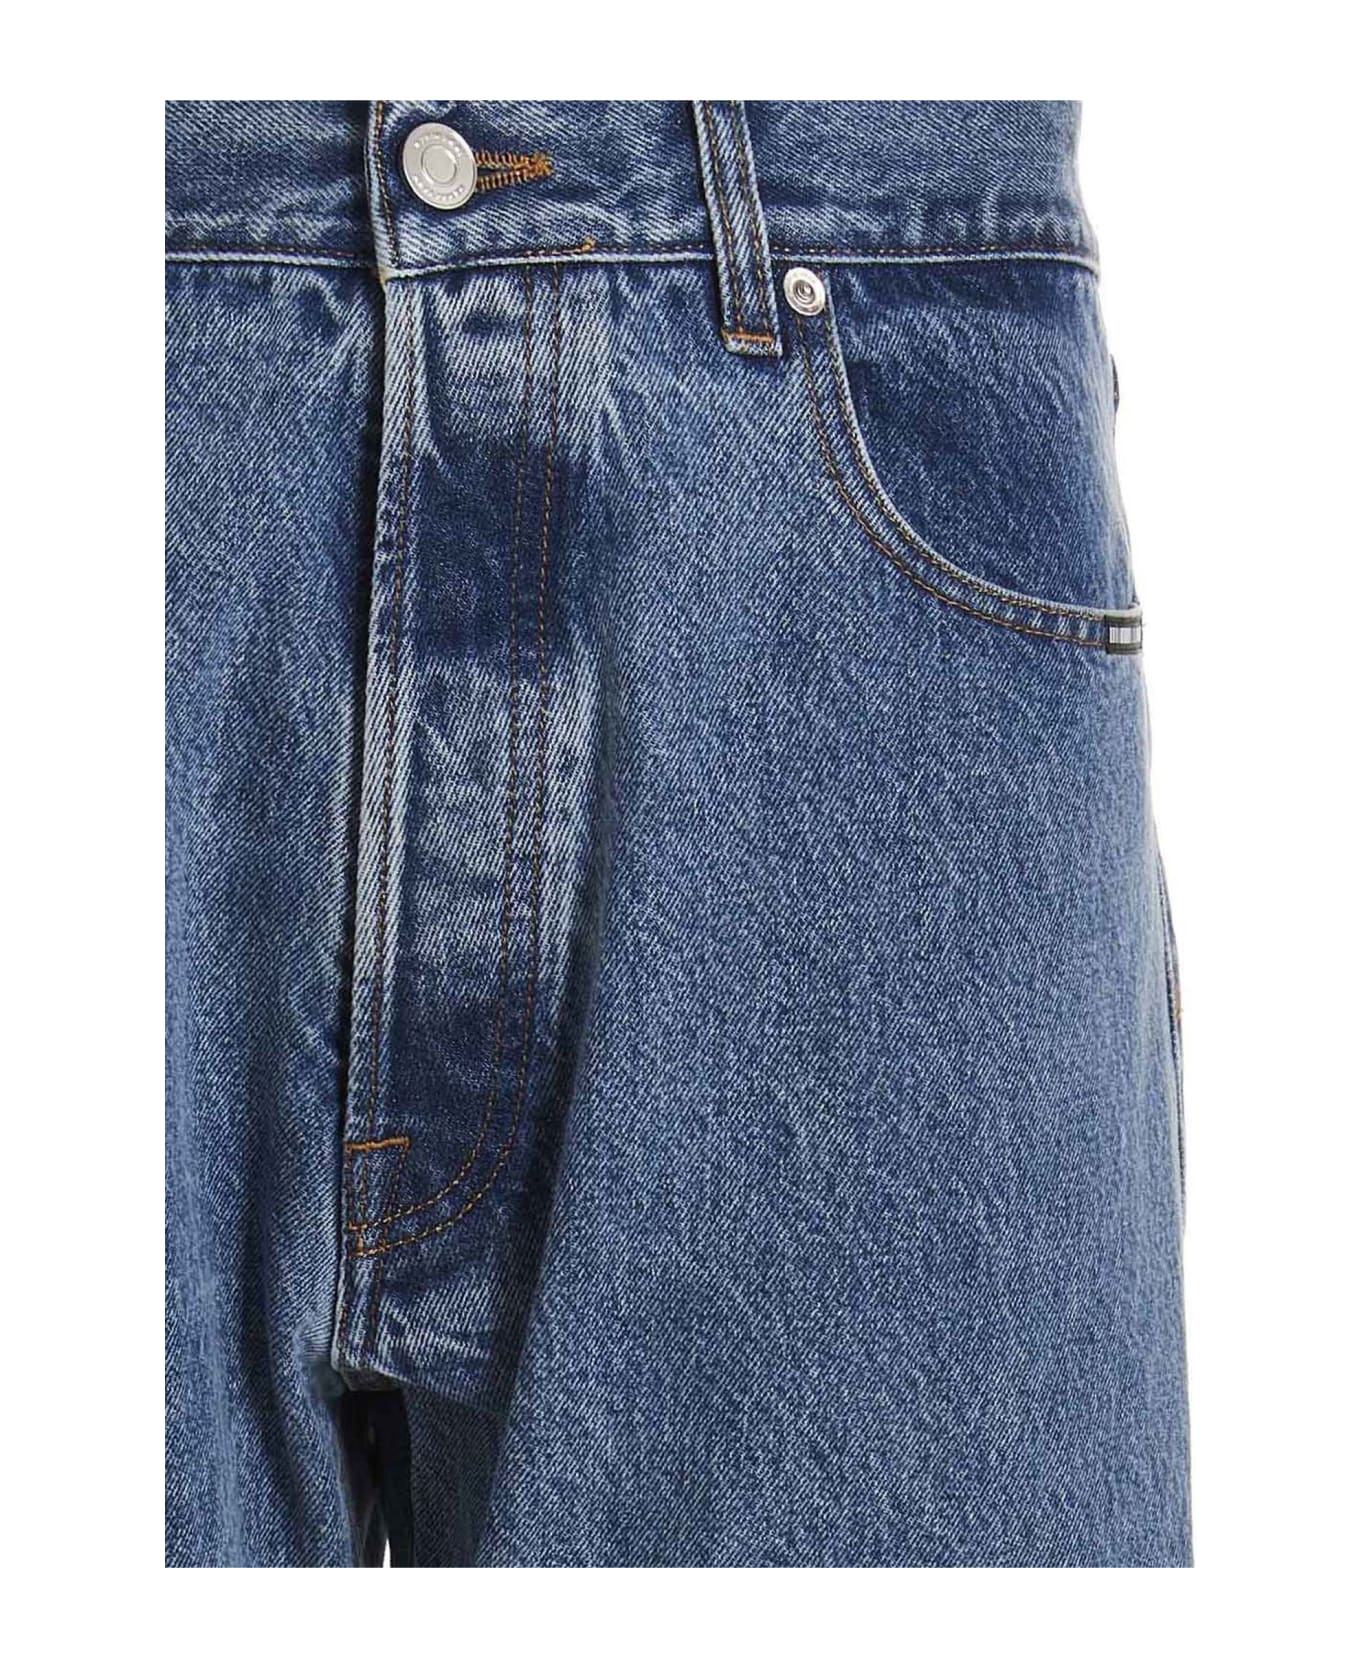 VTMNTS 5-pocket Jeans - Blue